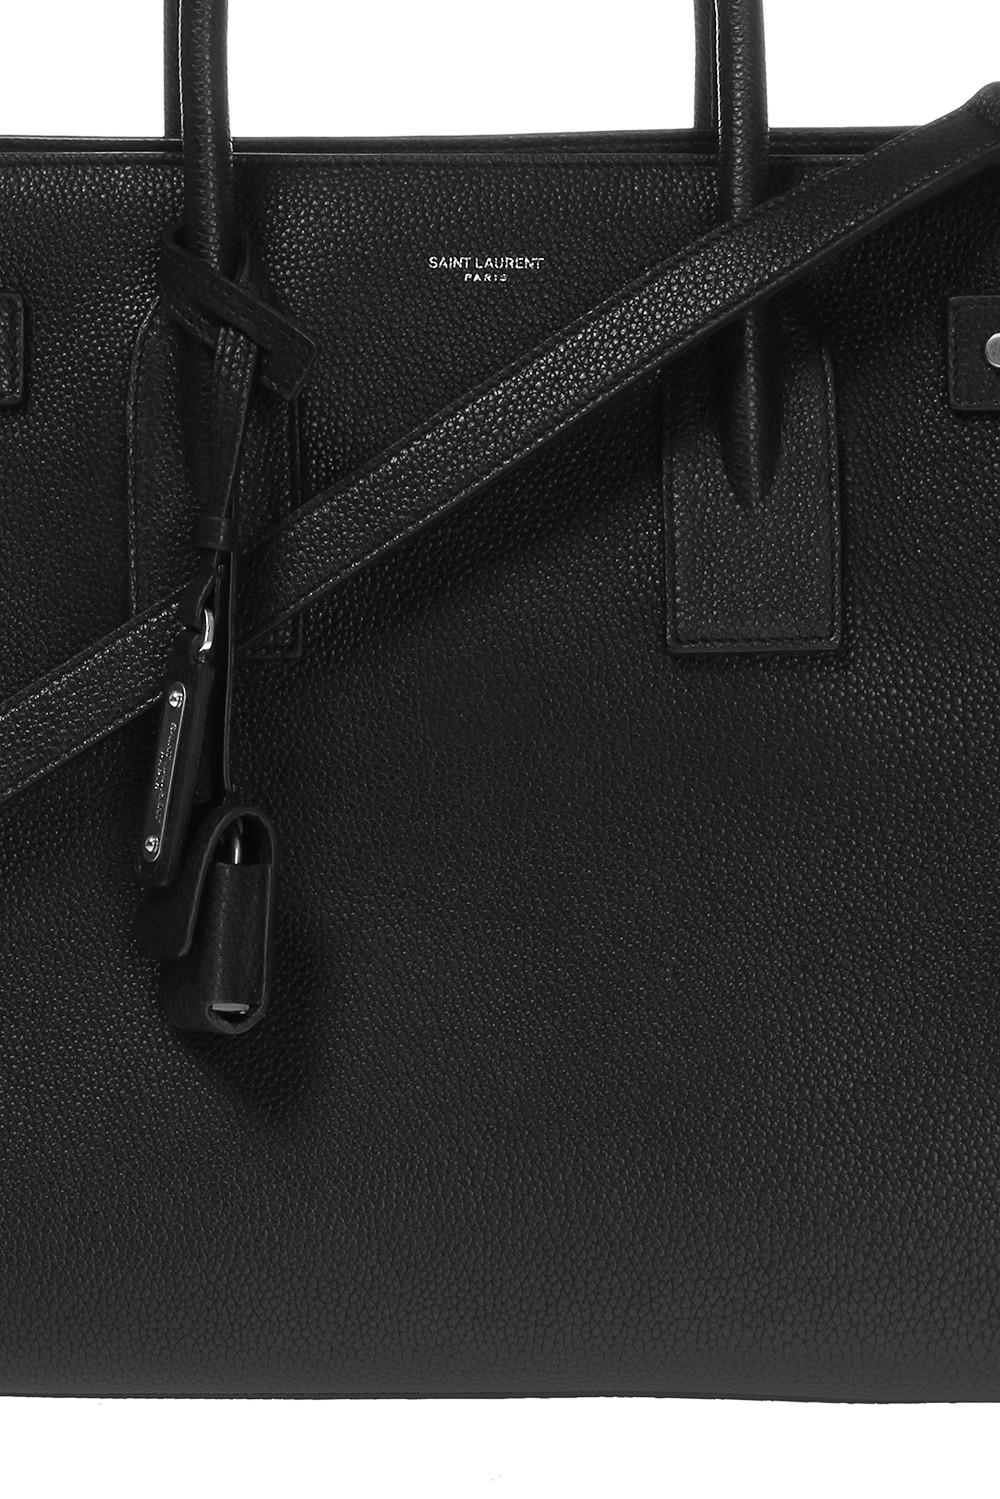 Grey 'Sac De Jour Baby' shoulder bag Saint Laurent - Vitkac Germany